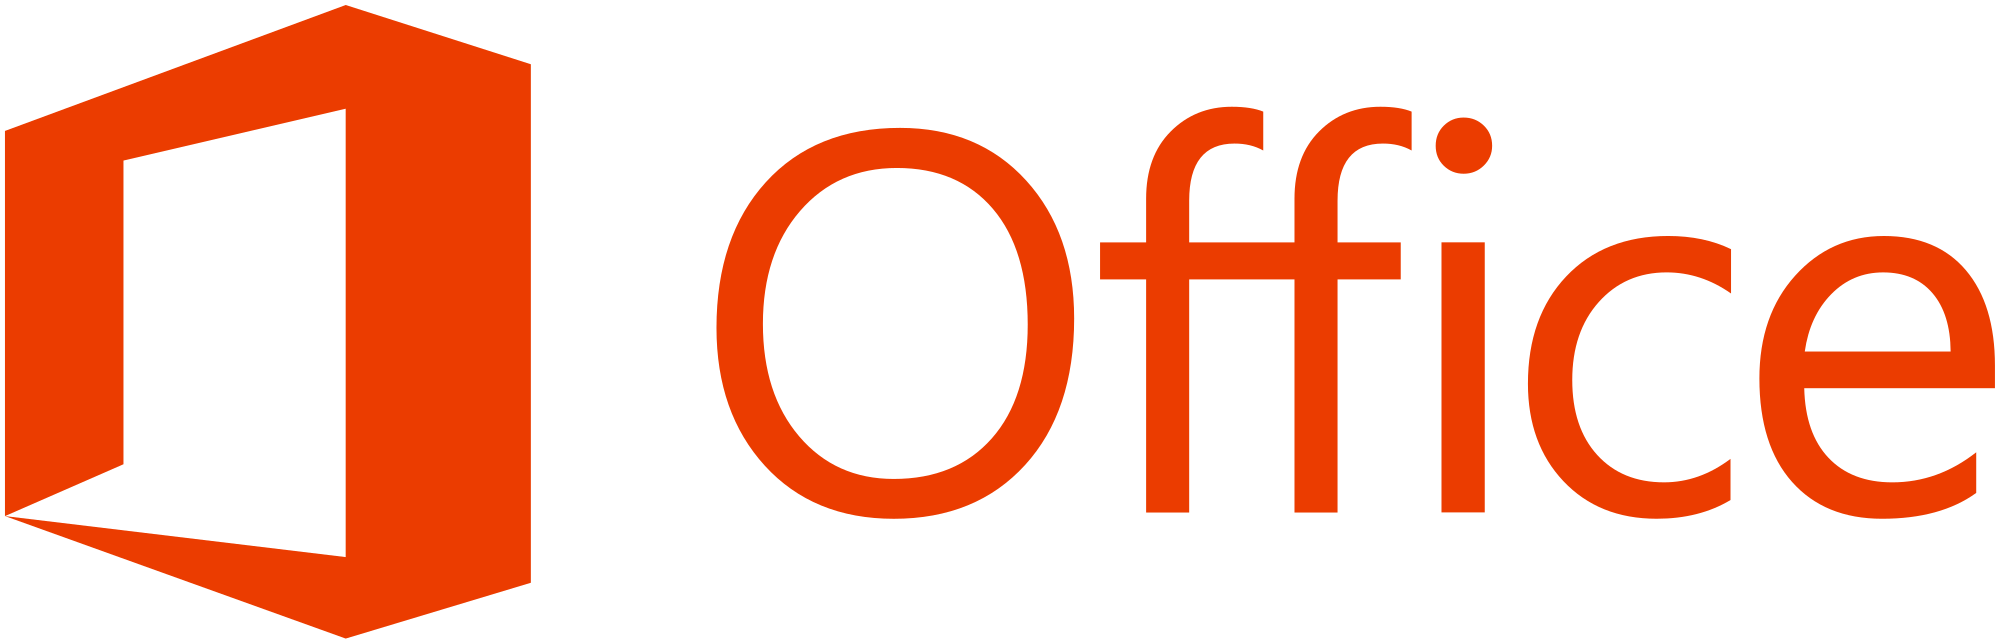 Office 2013 Logo - Microsoft Office 2013 logo and wordmark.svg